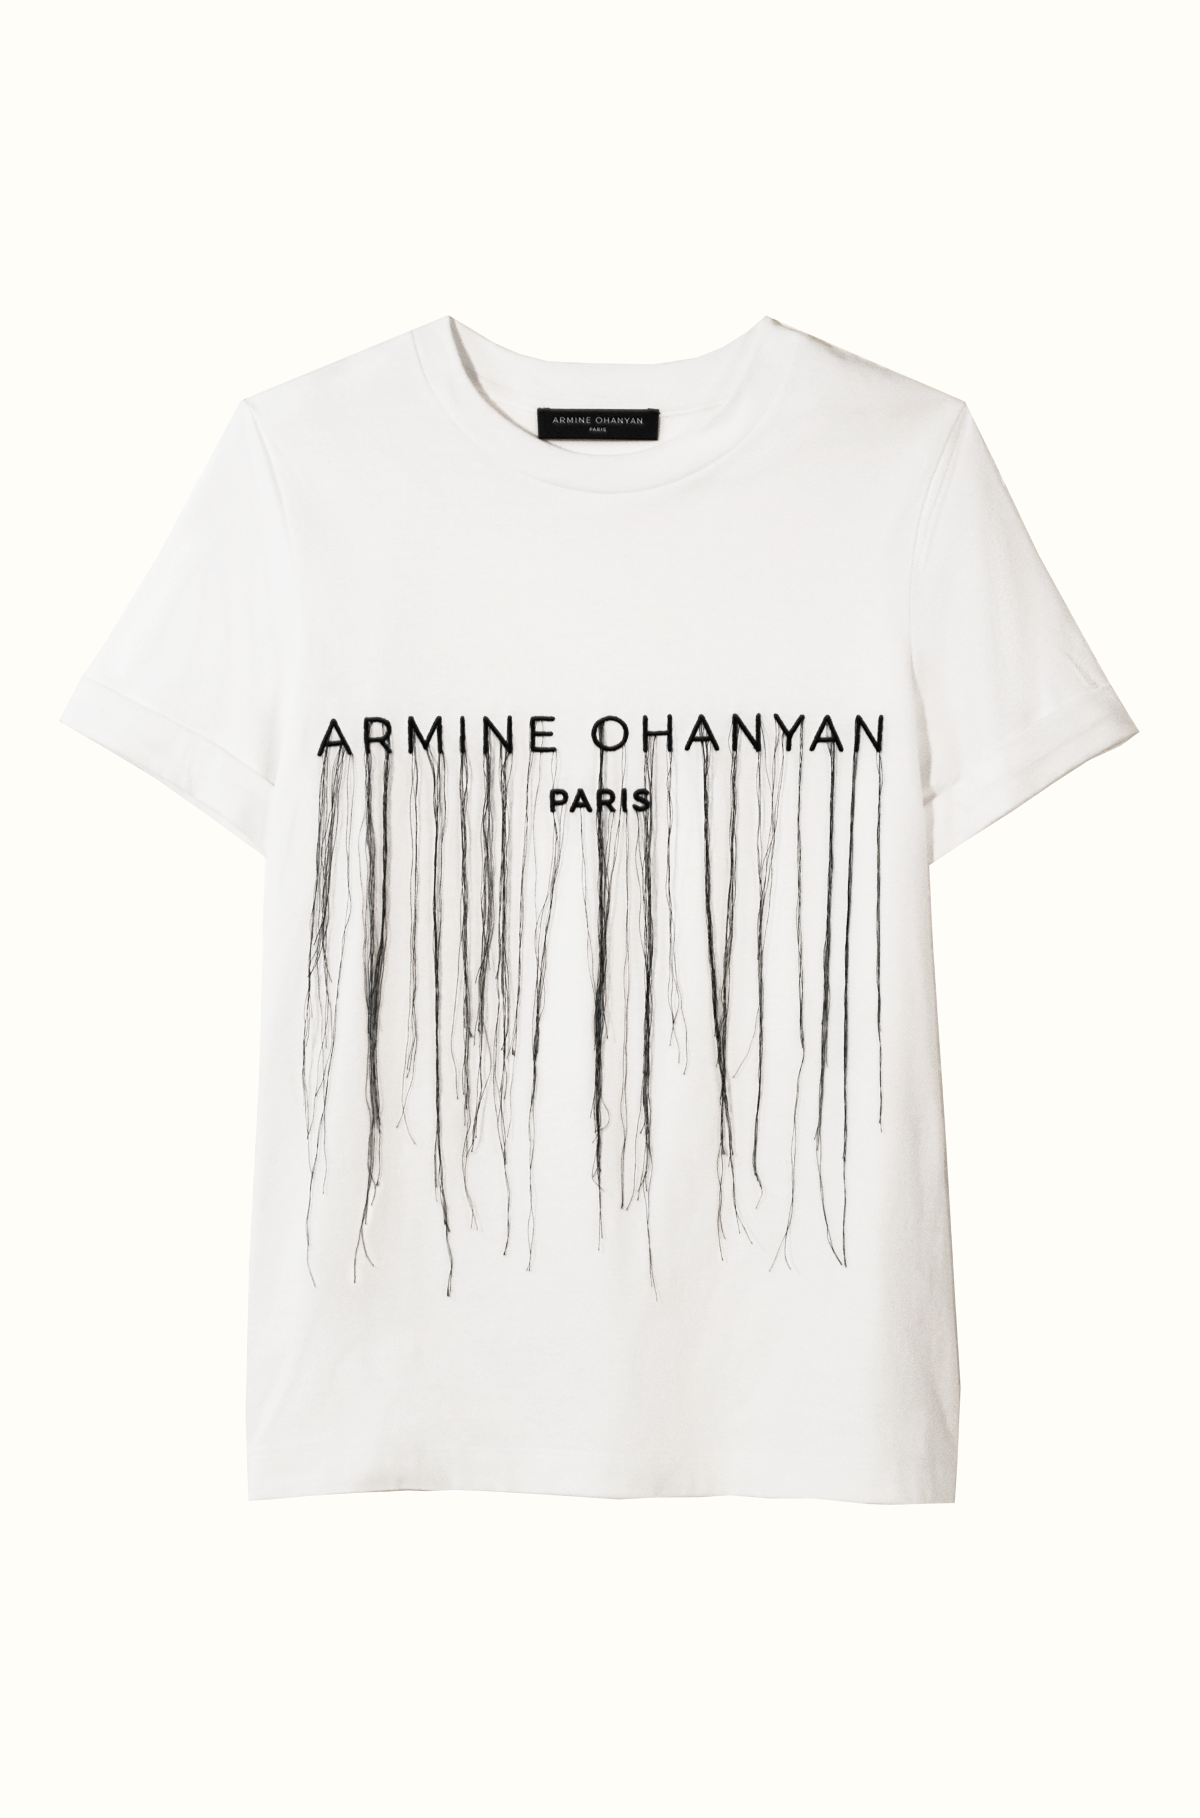 T-shirt avec broderie artisanale Armine Ohanyan Paris